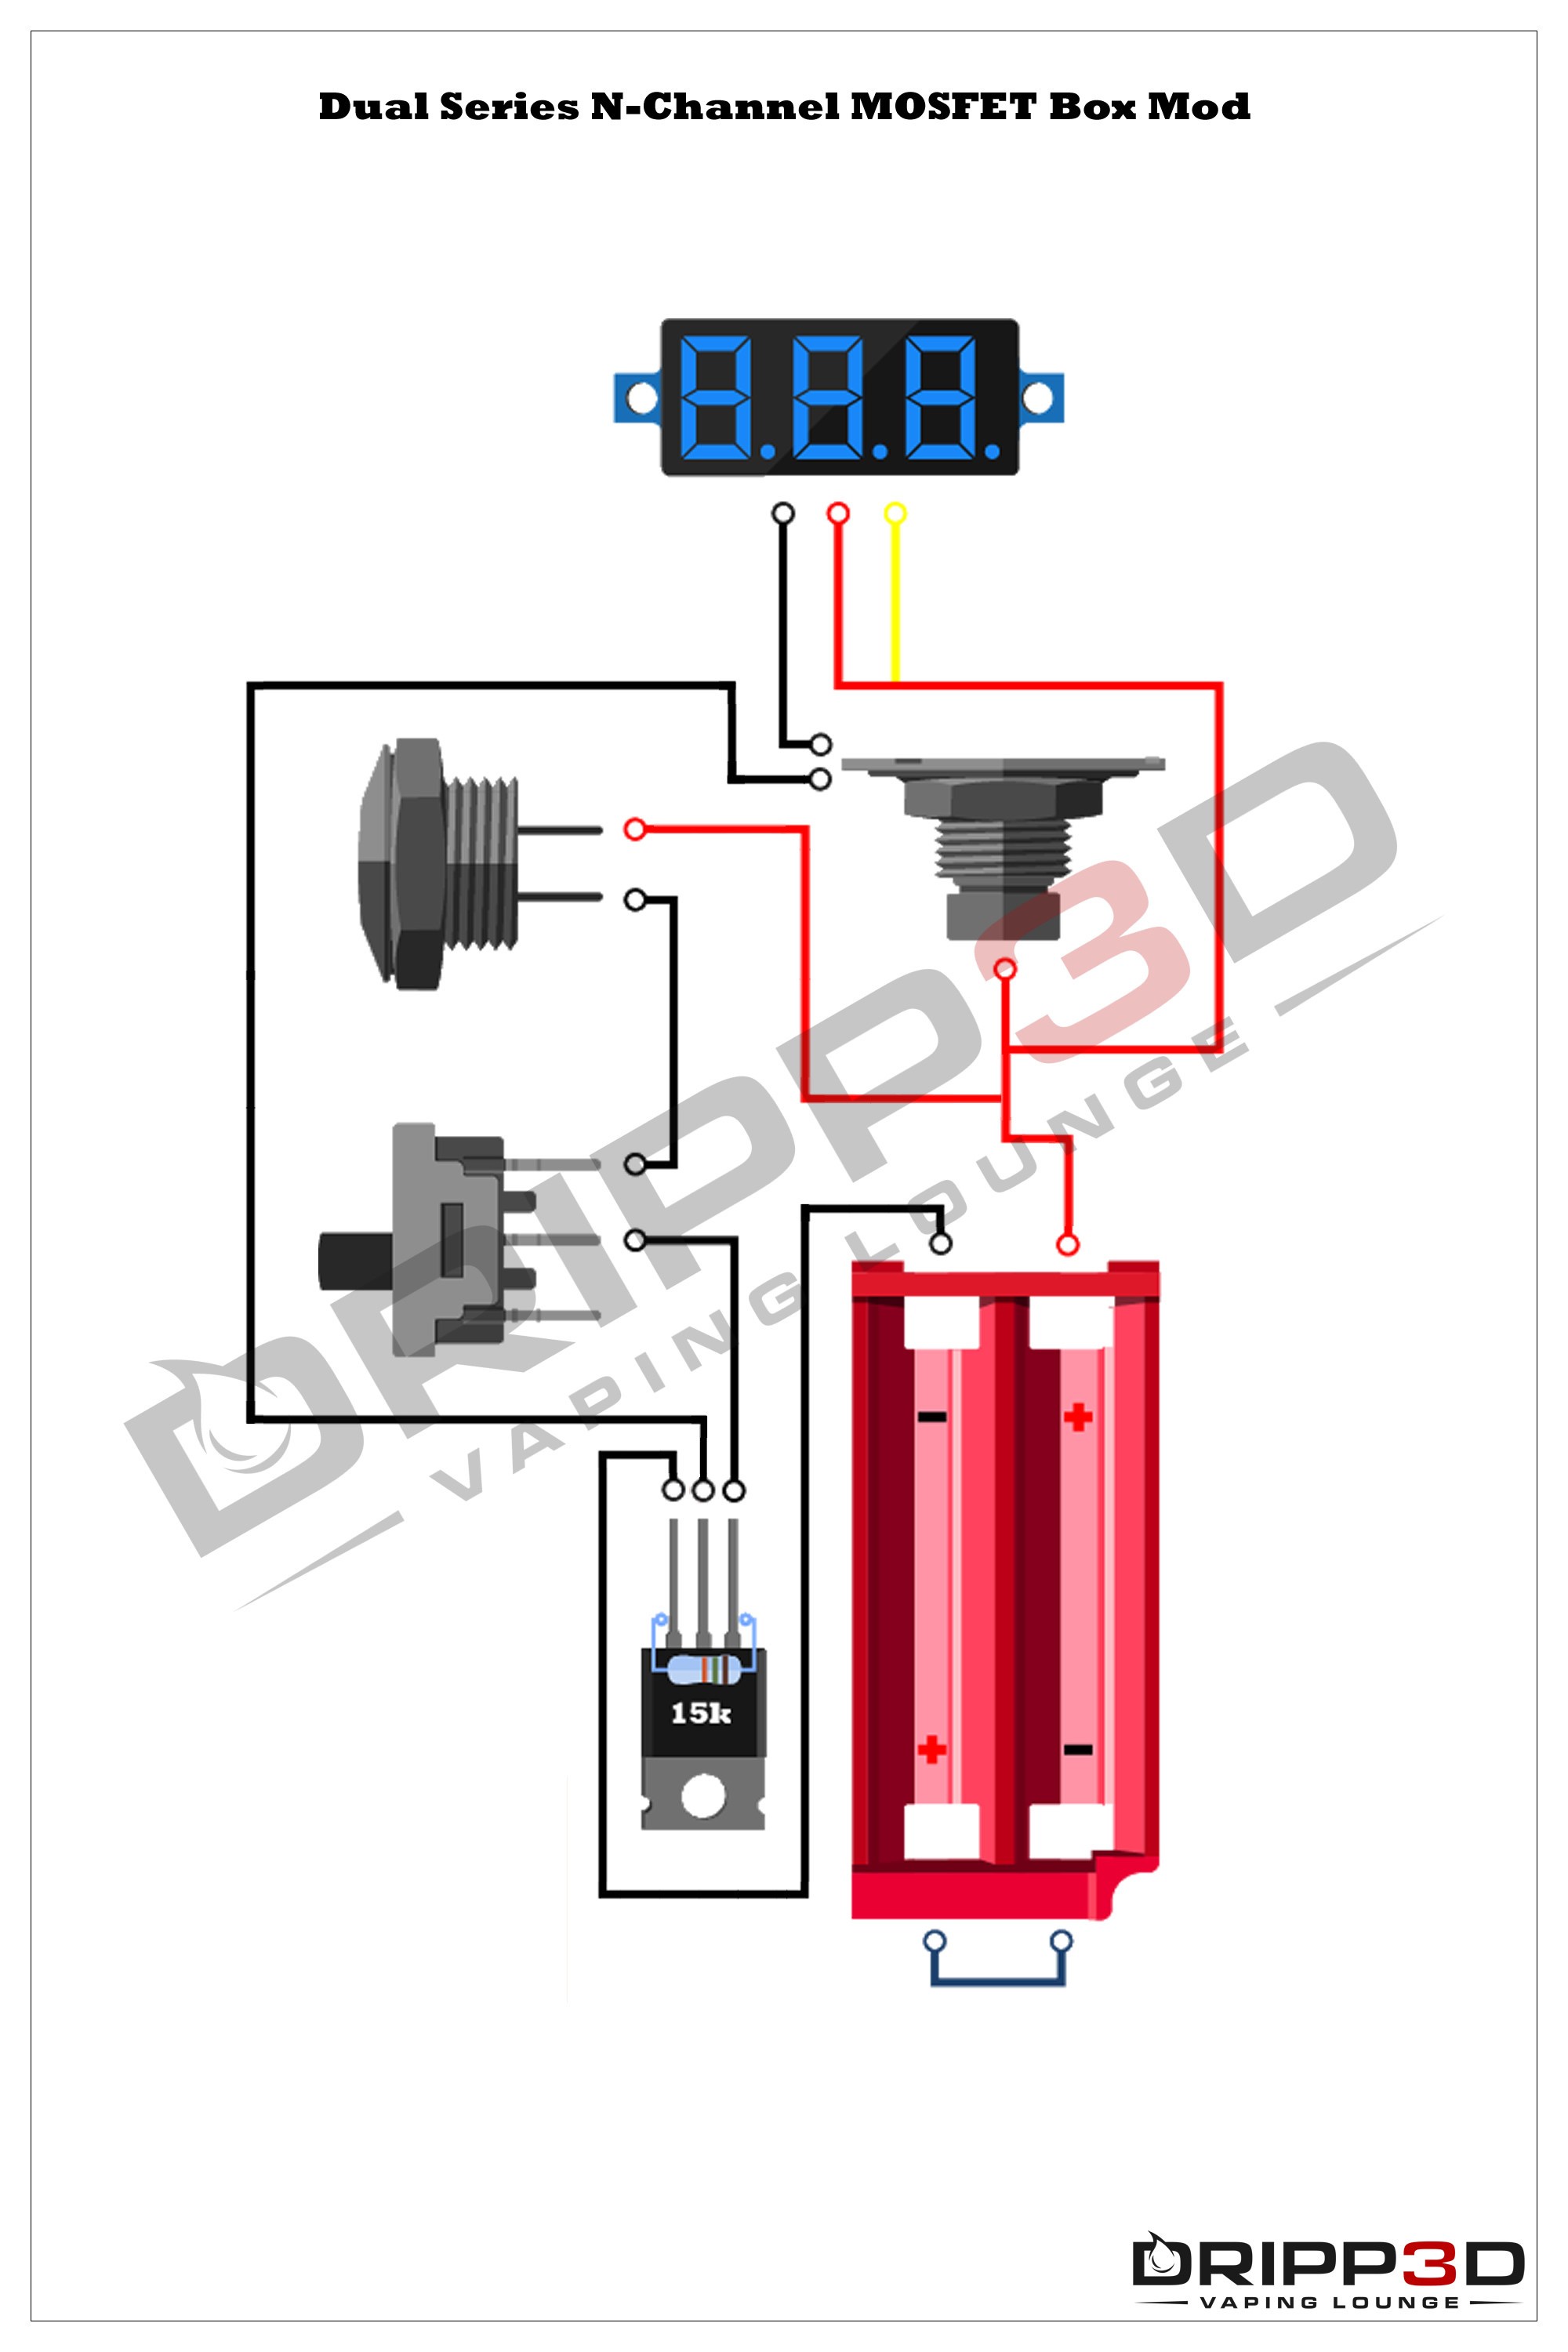 Unregulated Series Box Mod Wiring Diagram 1